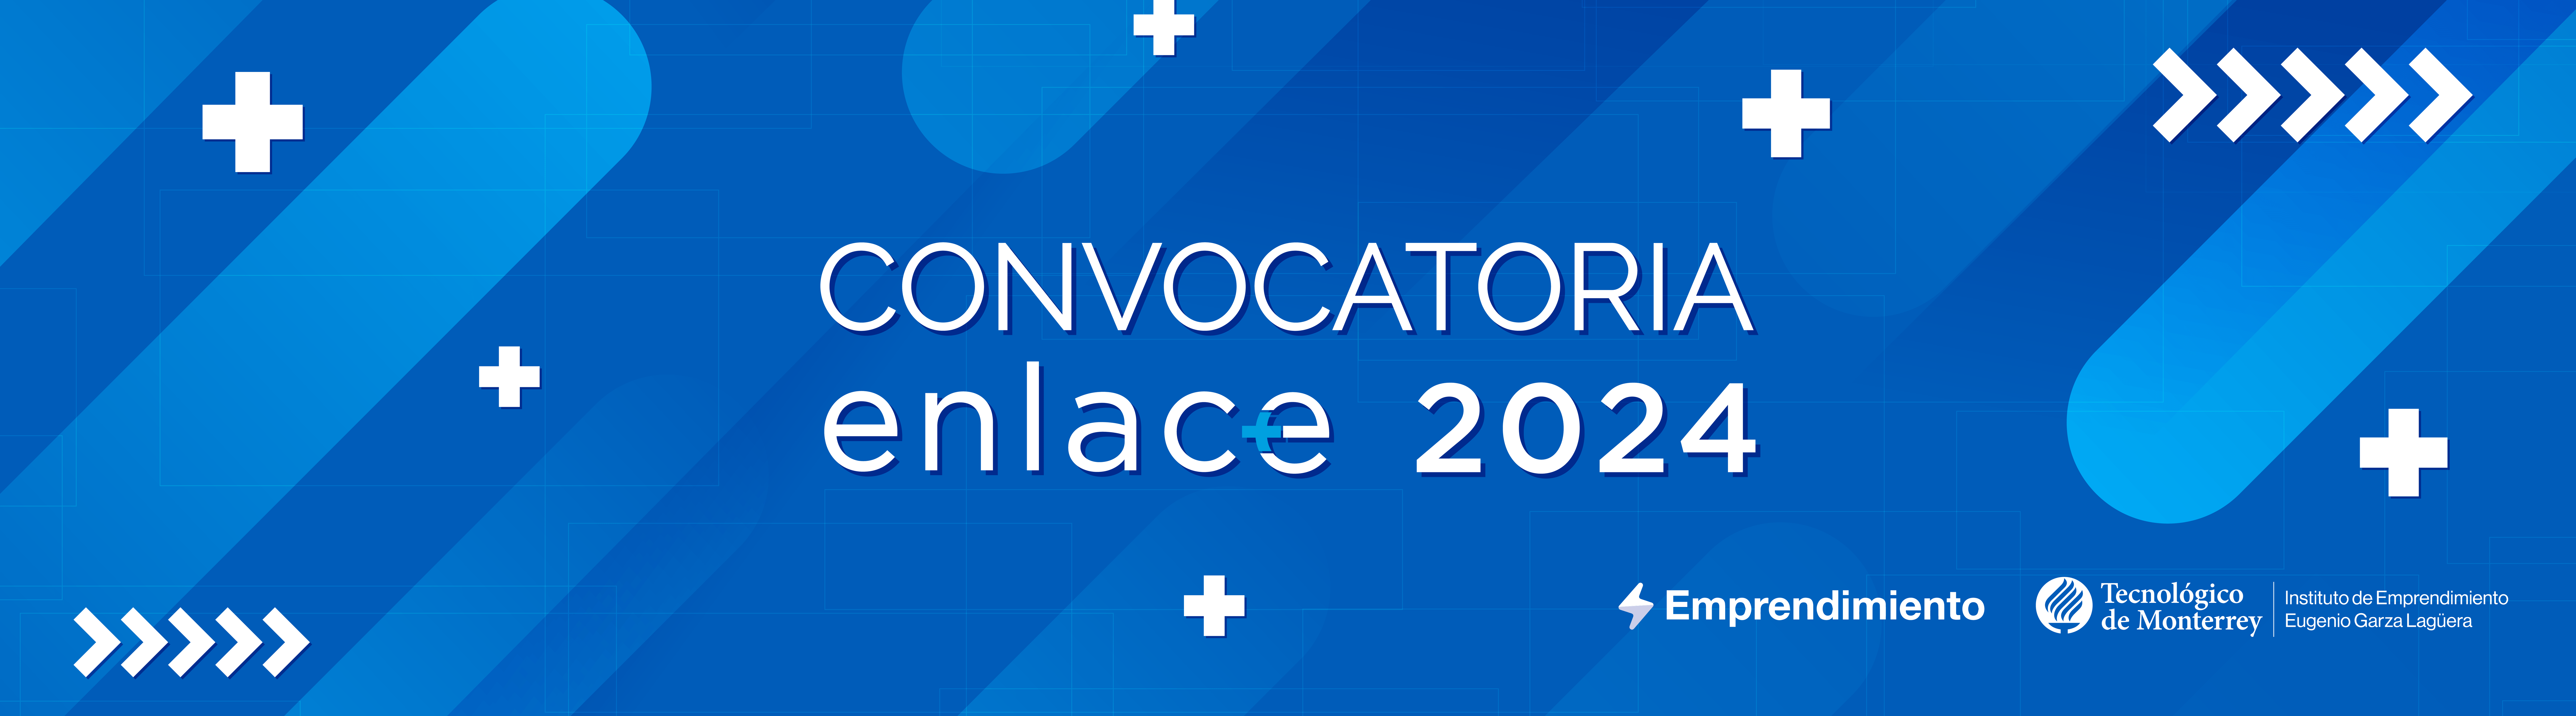 Banner header convocatoria 2024